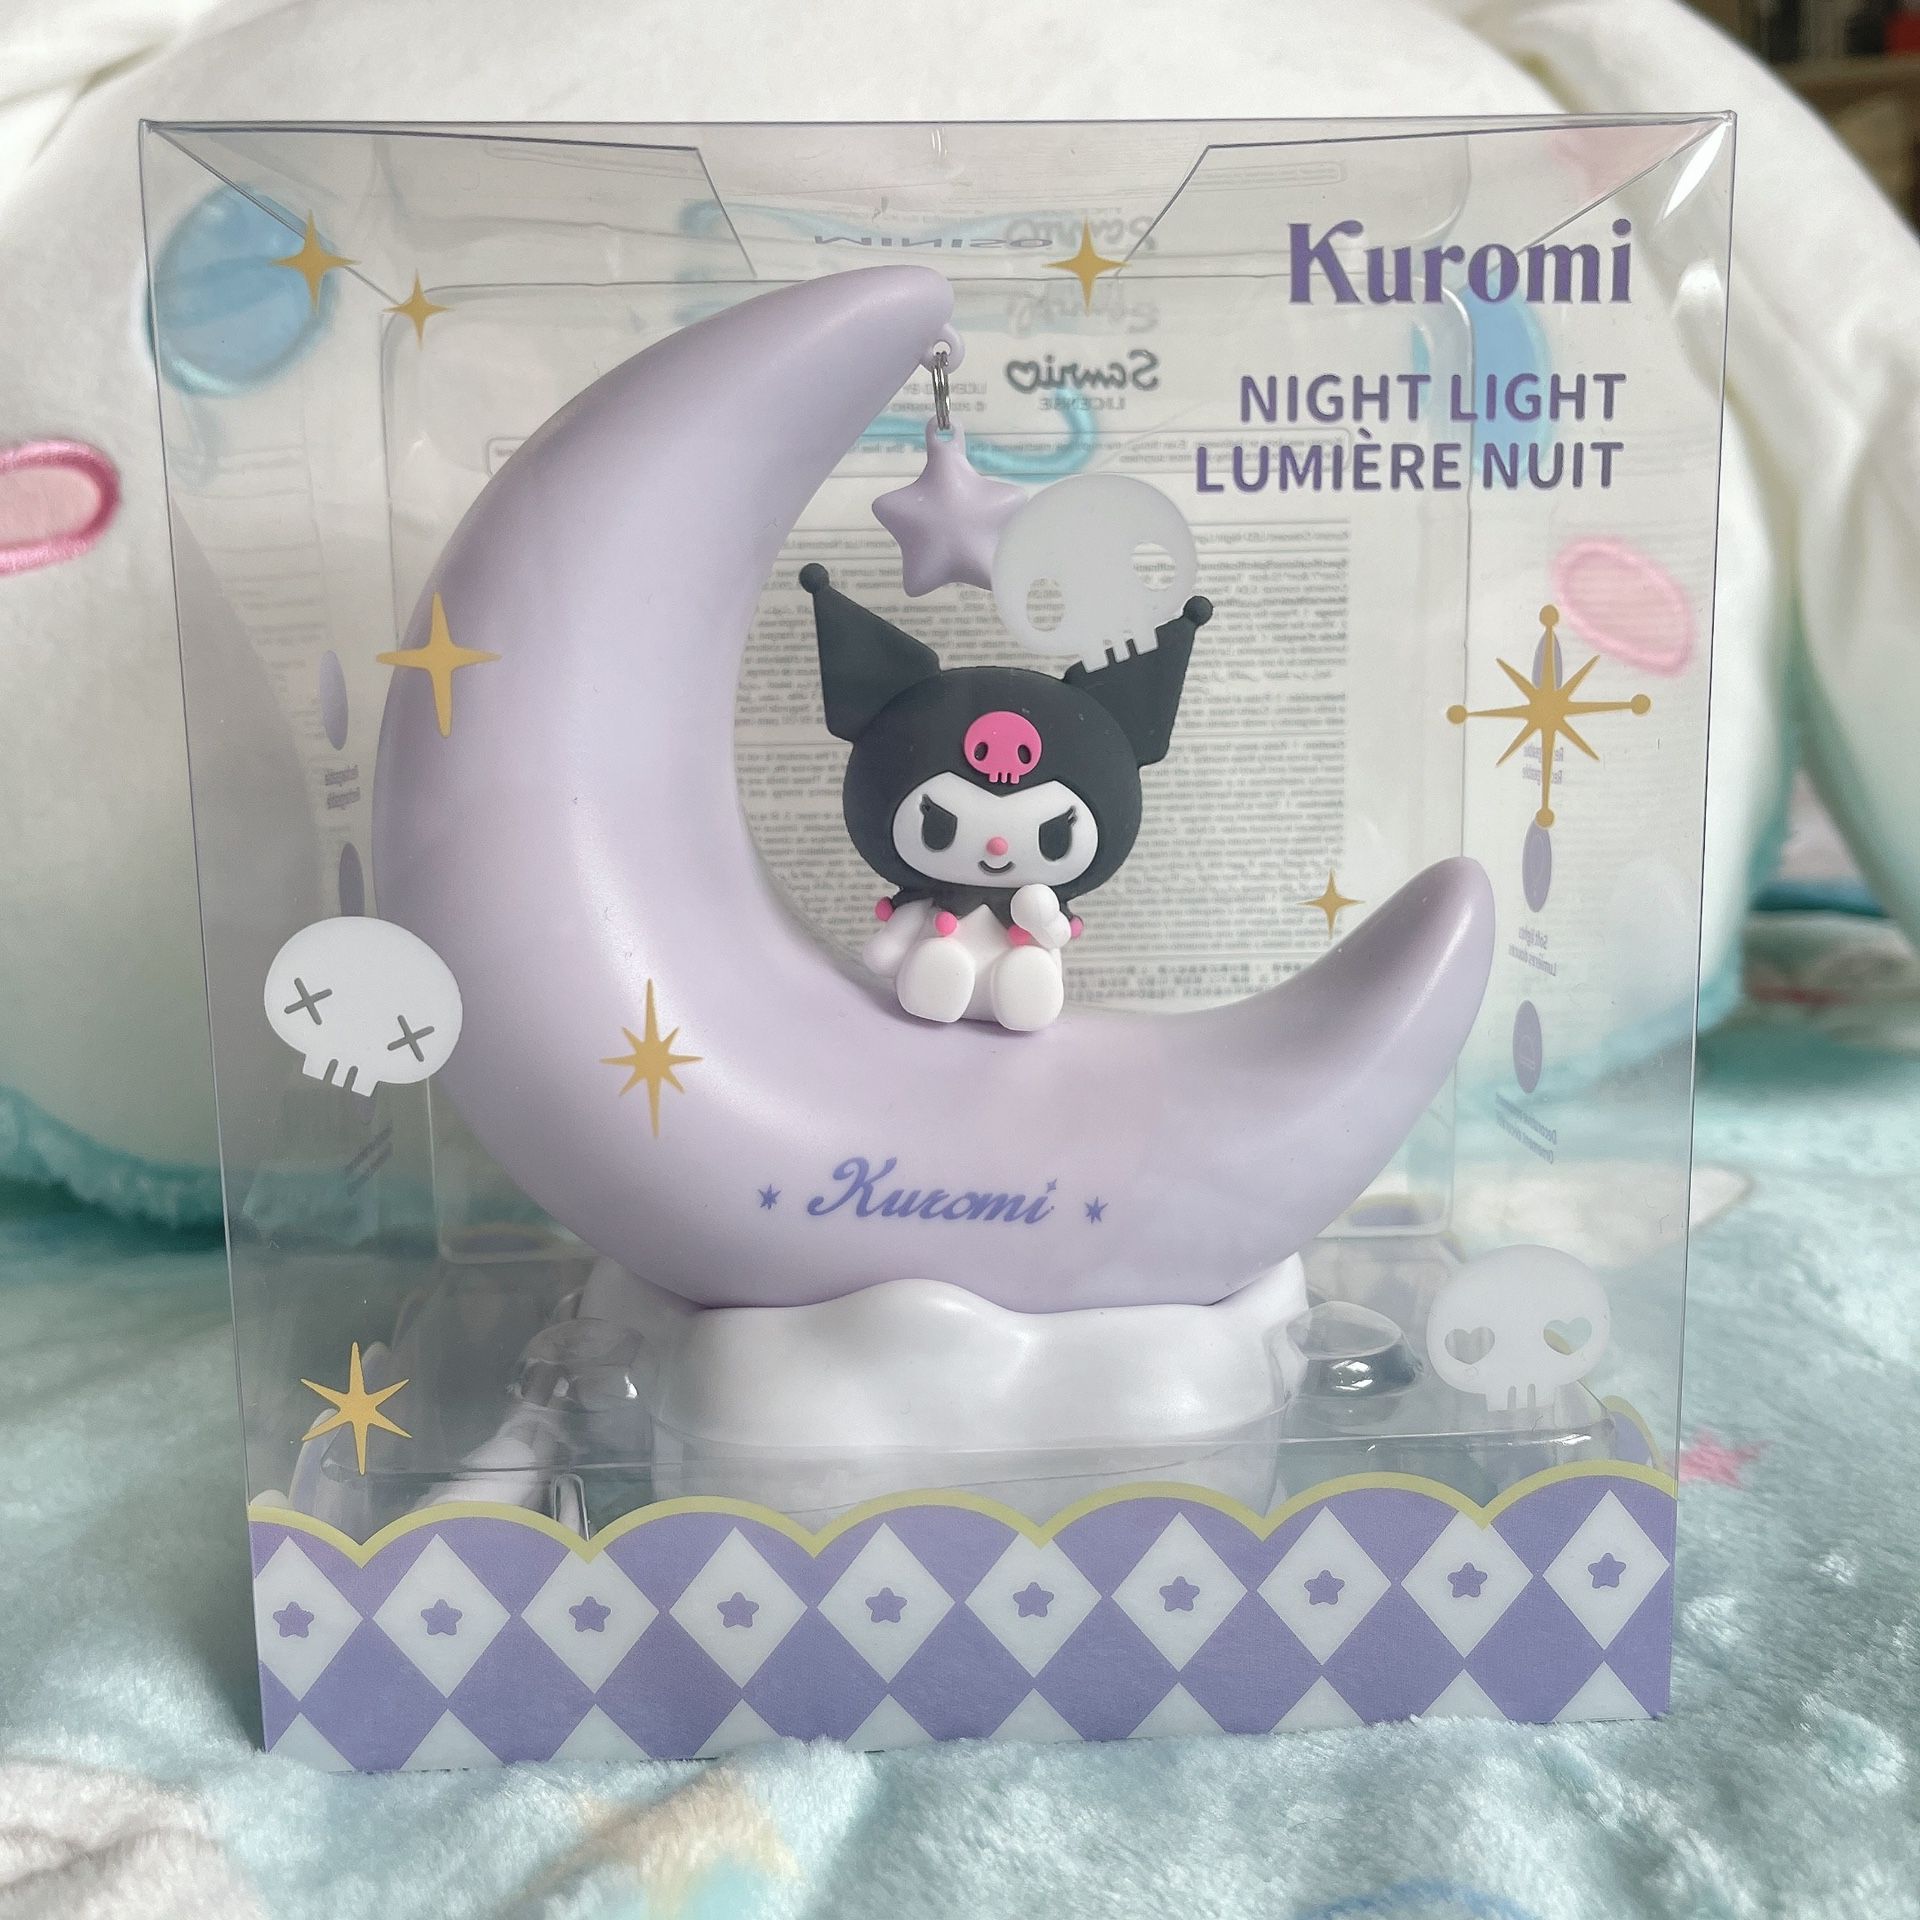 Kuromi Night Light